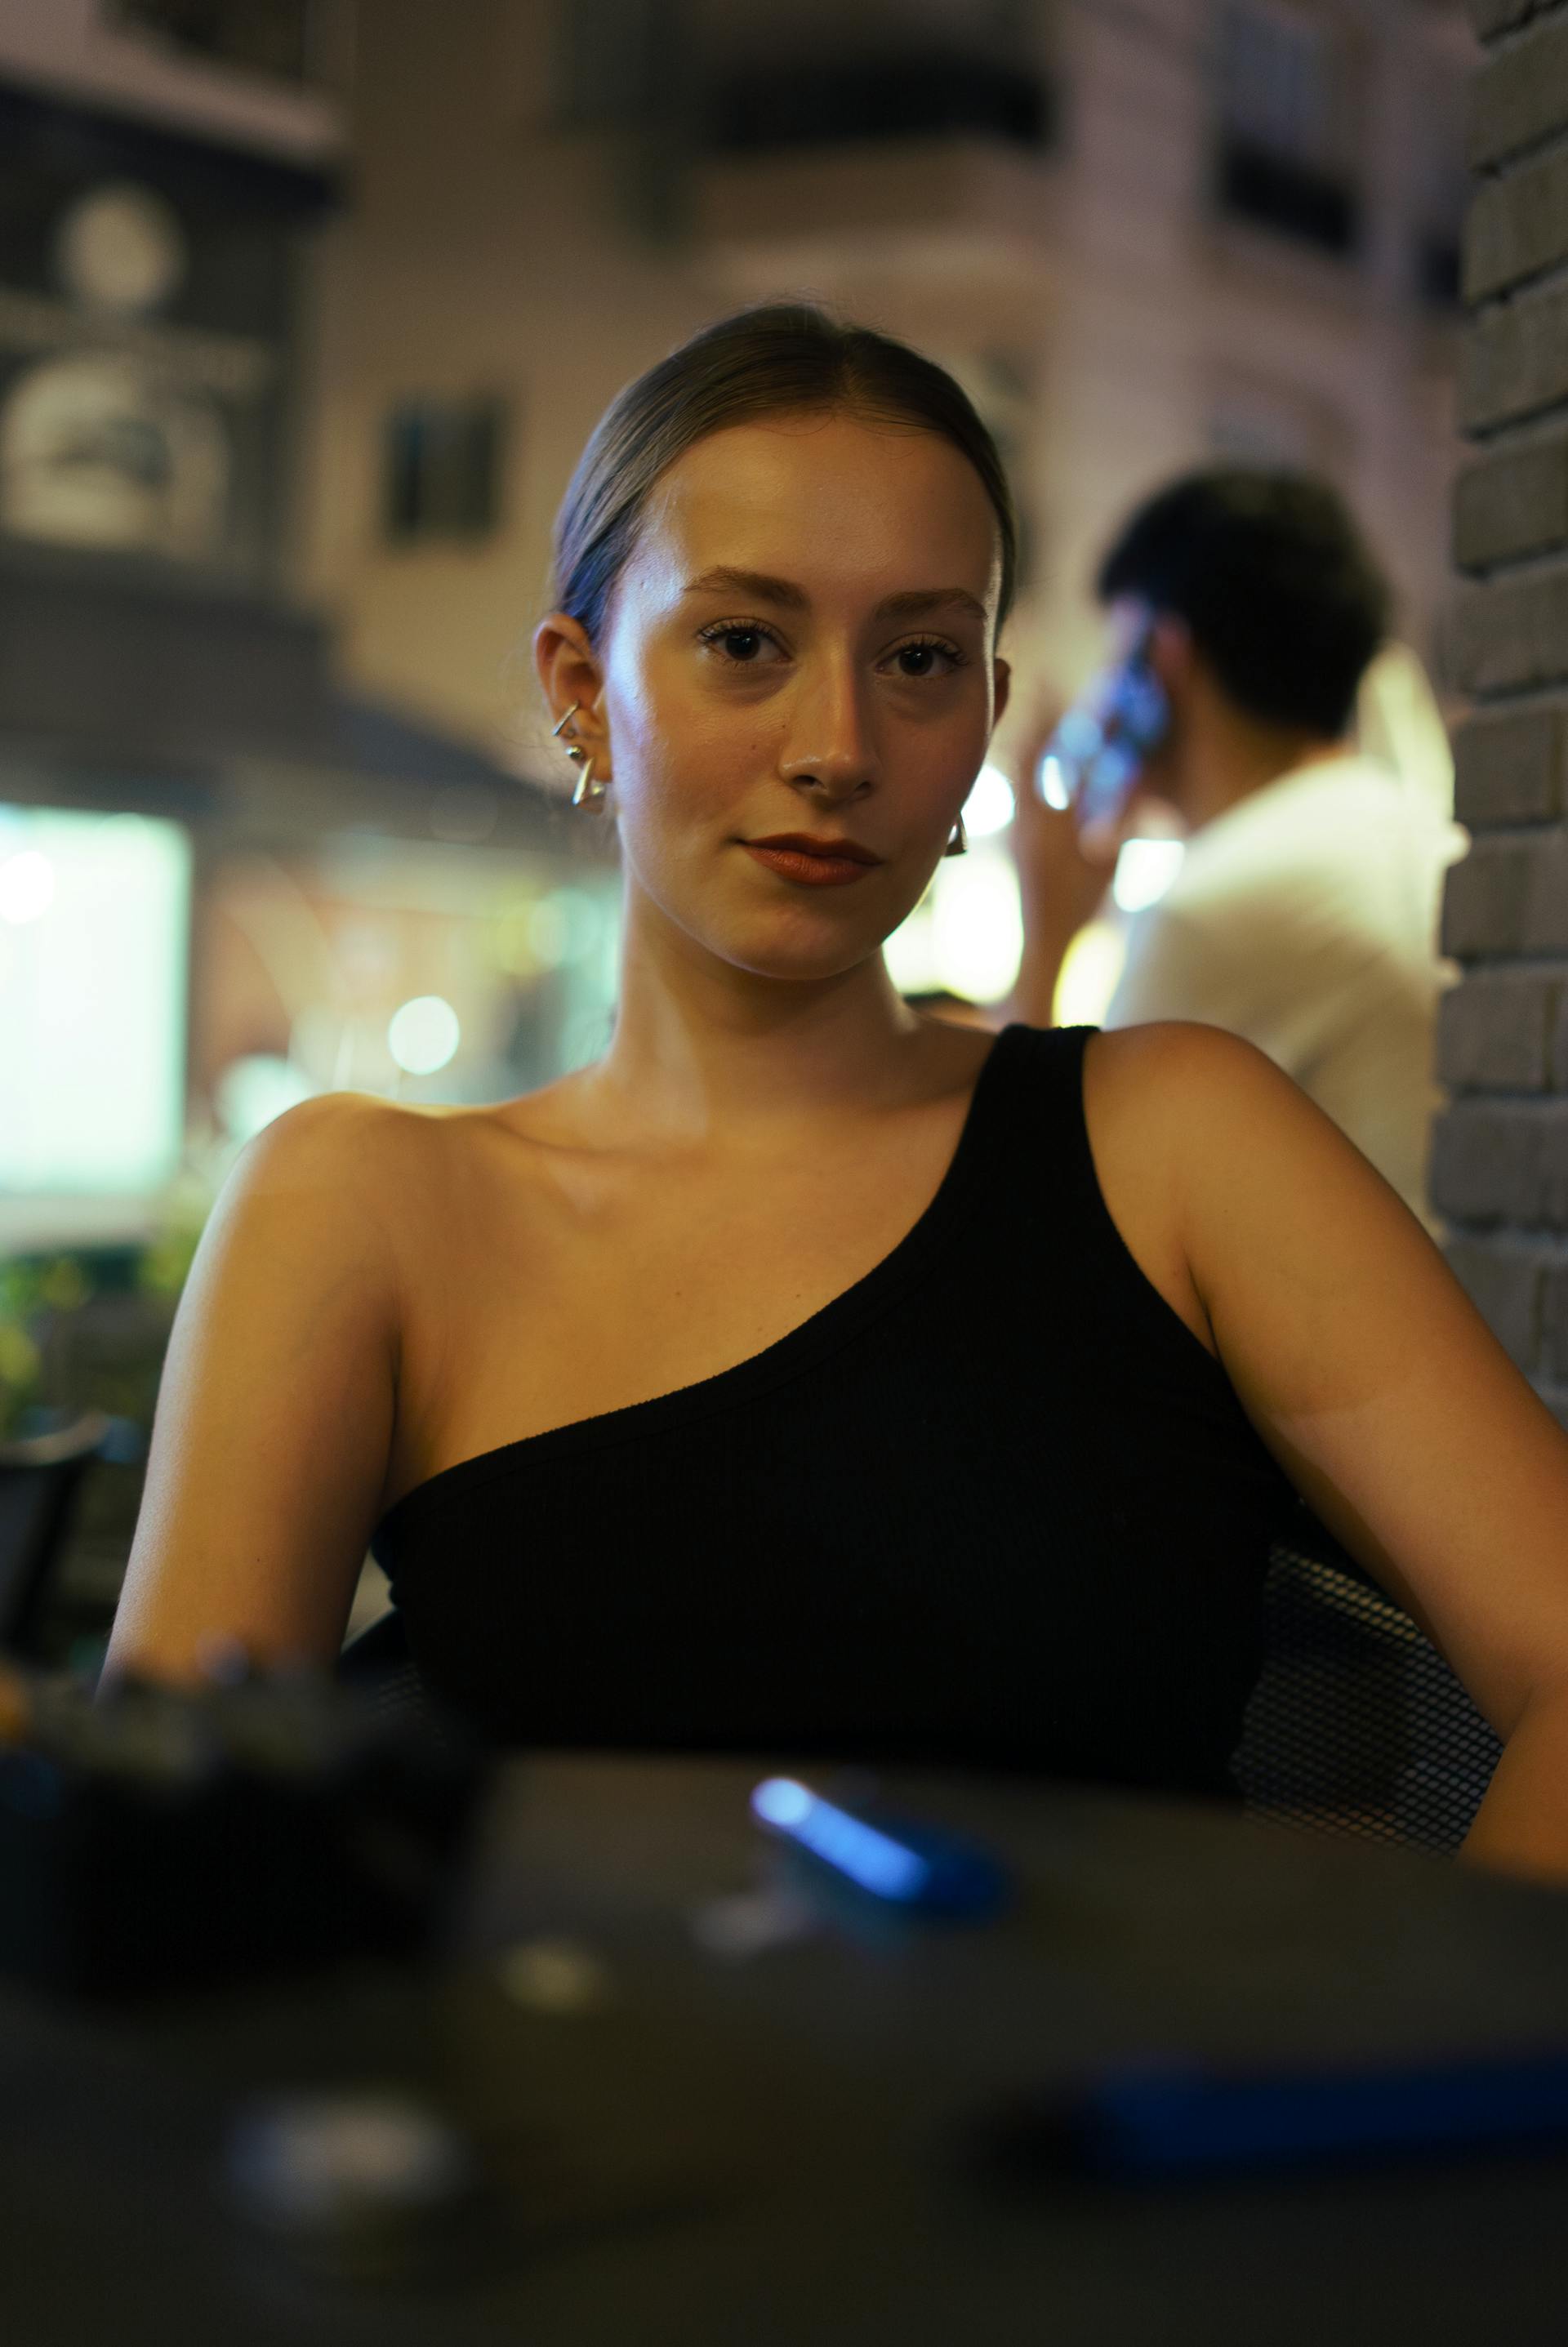 A woman sitting in a black dress | Source: Pexels